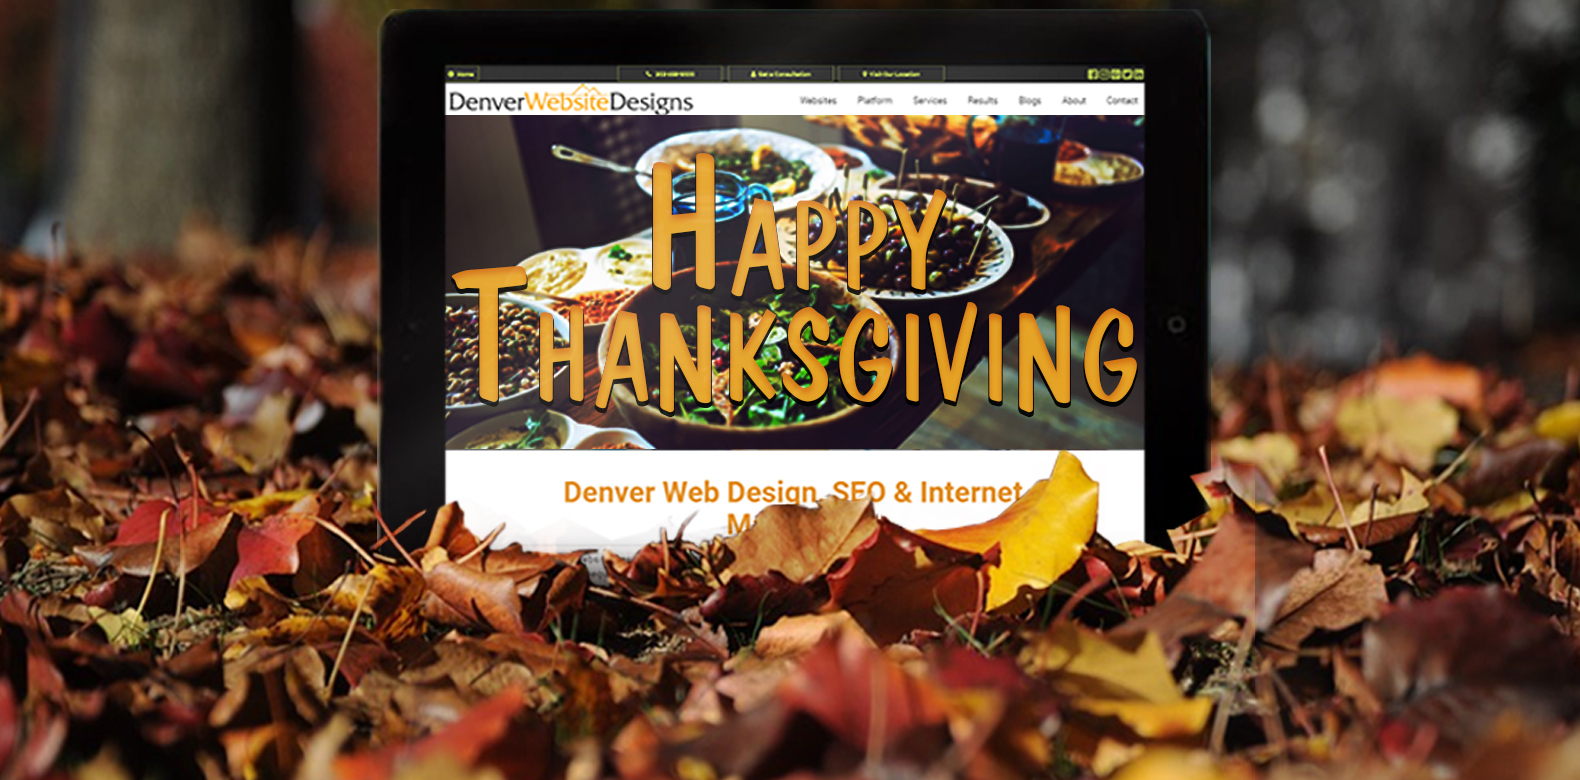 
Happy Thanksgiving from Denver Website Designs!